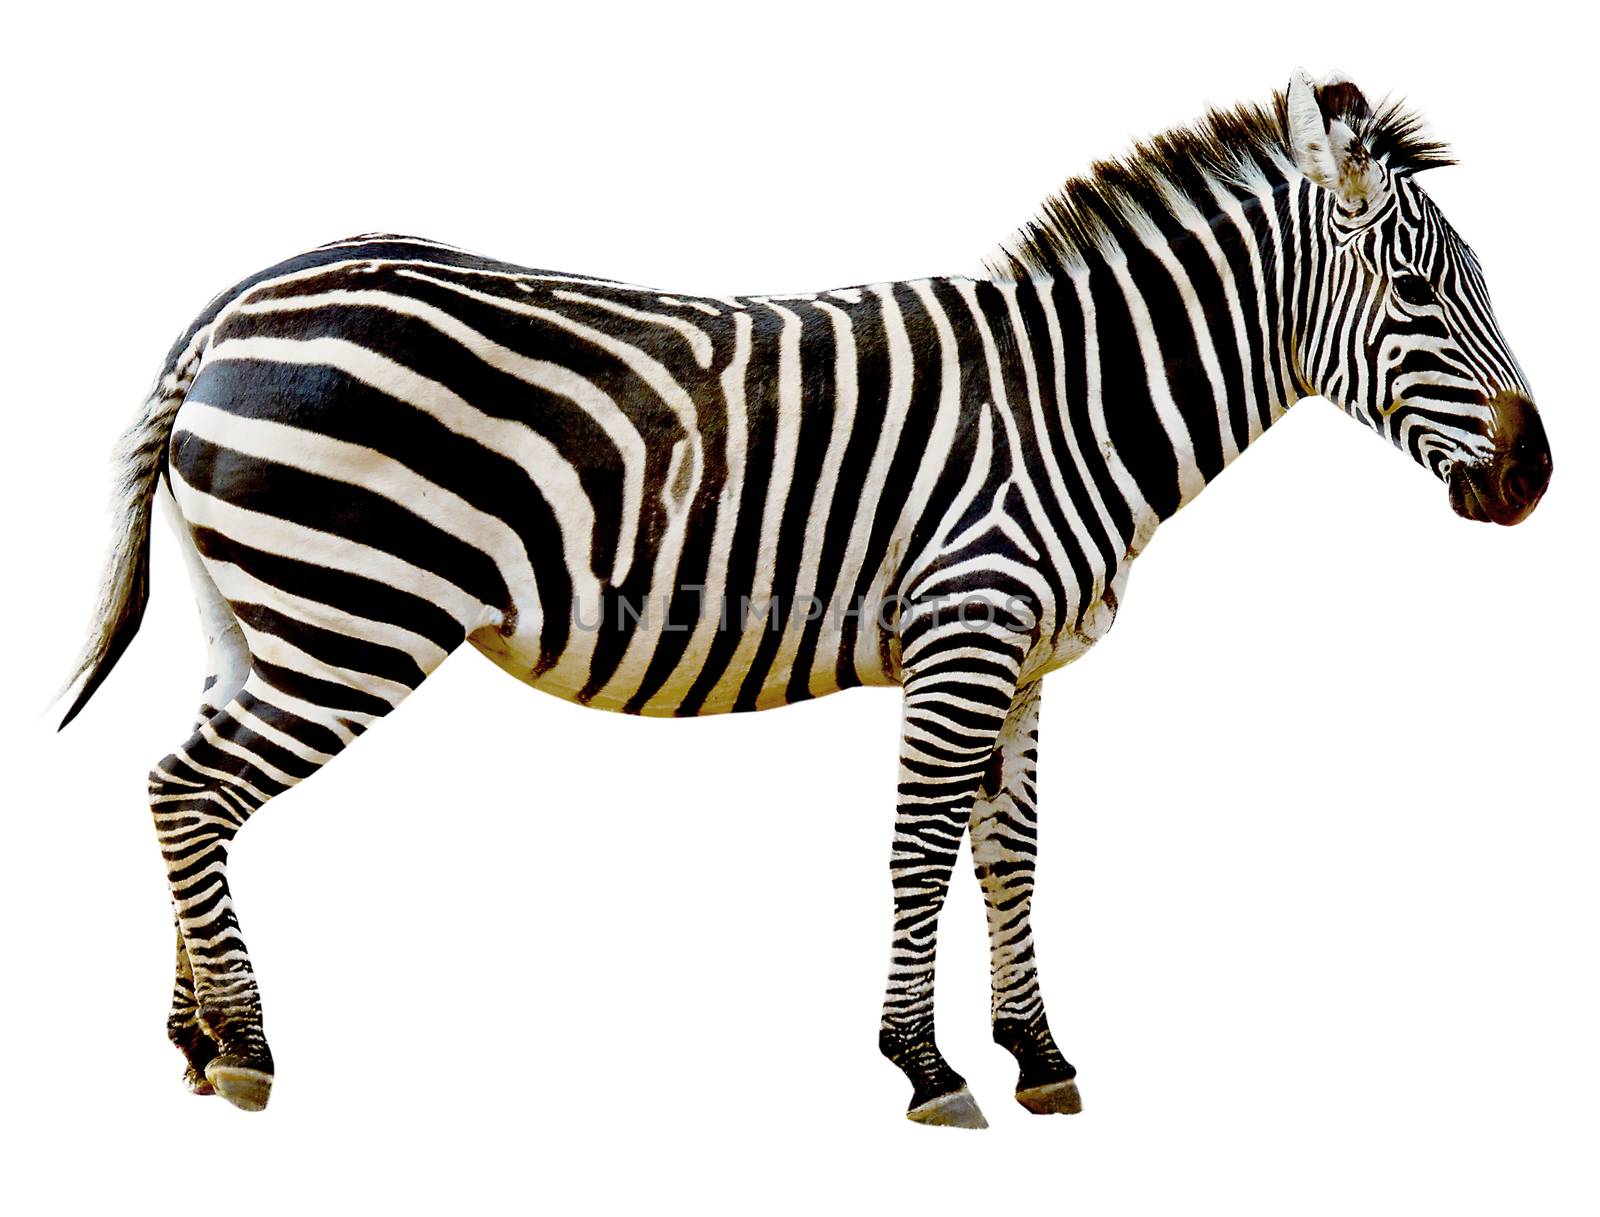 Zebra isolated on white background by sannie32